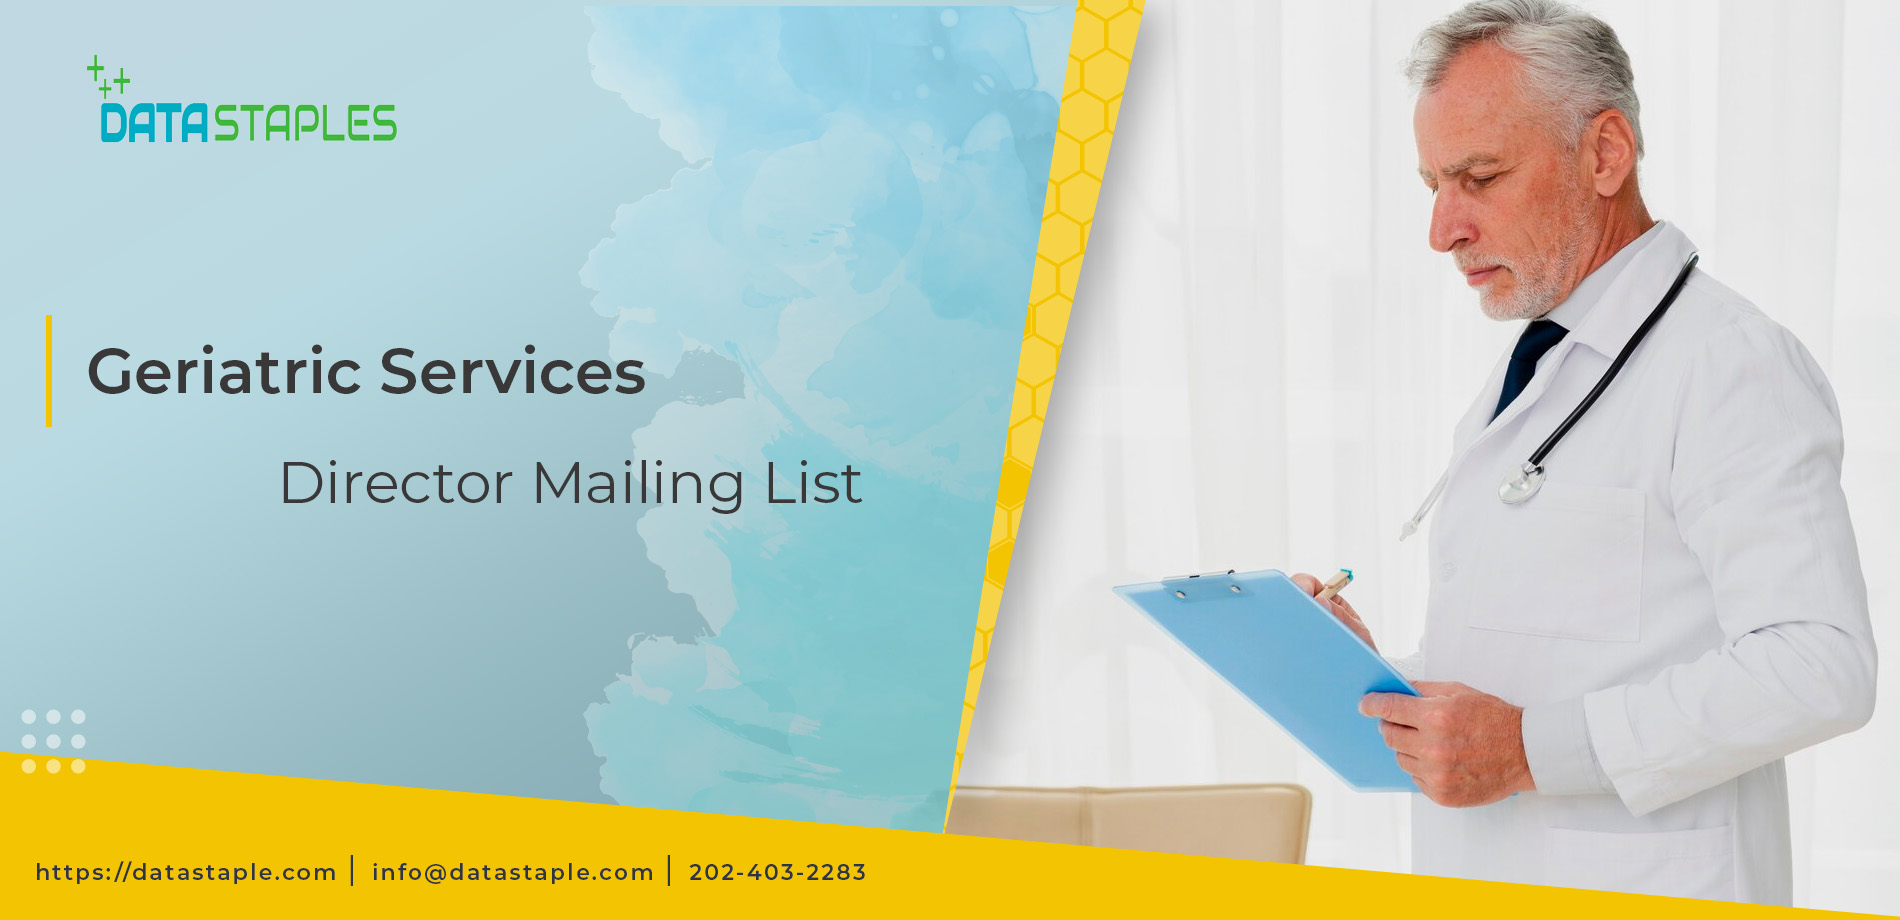 Geriatric Services Director Mailing List | DataStaples